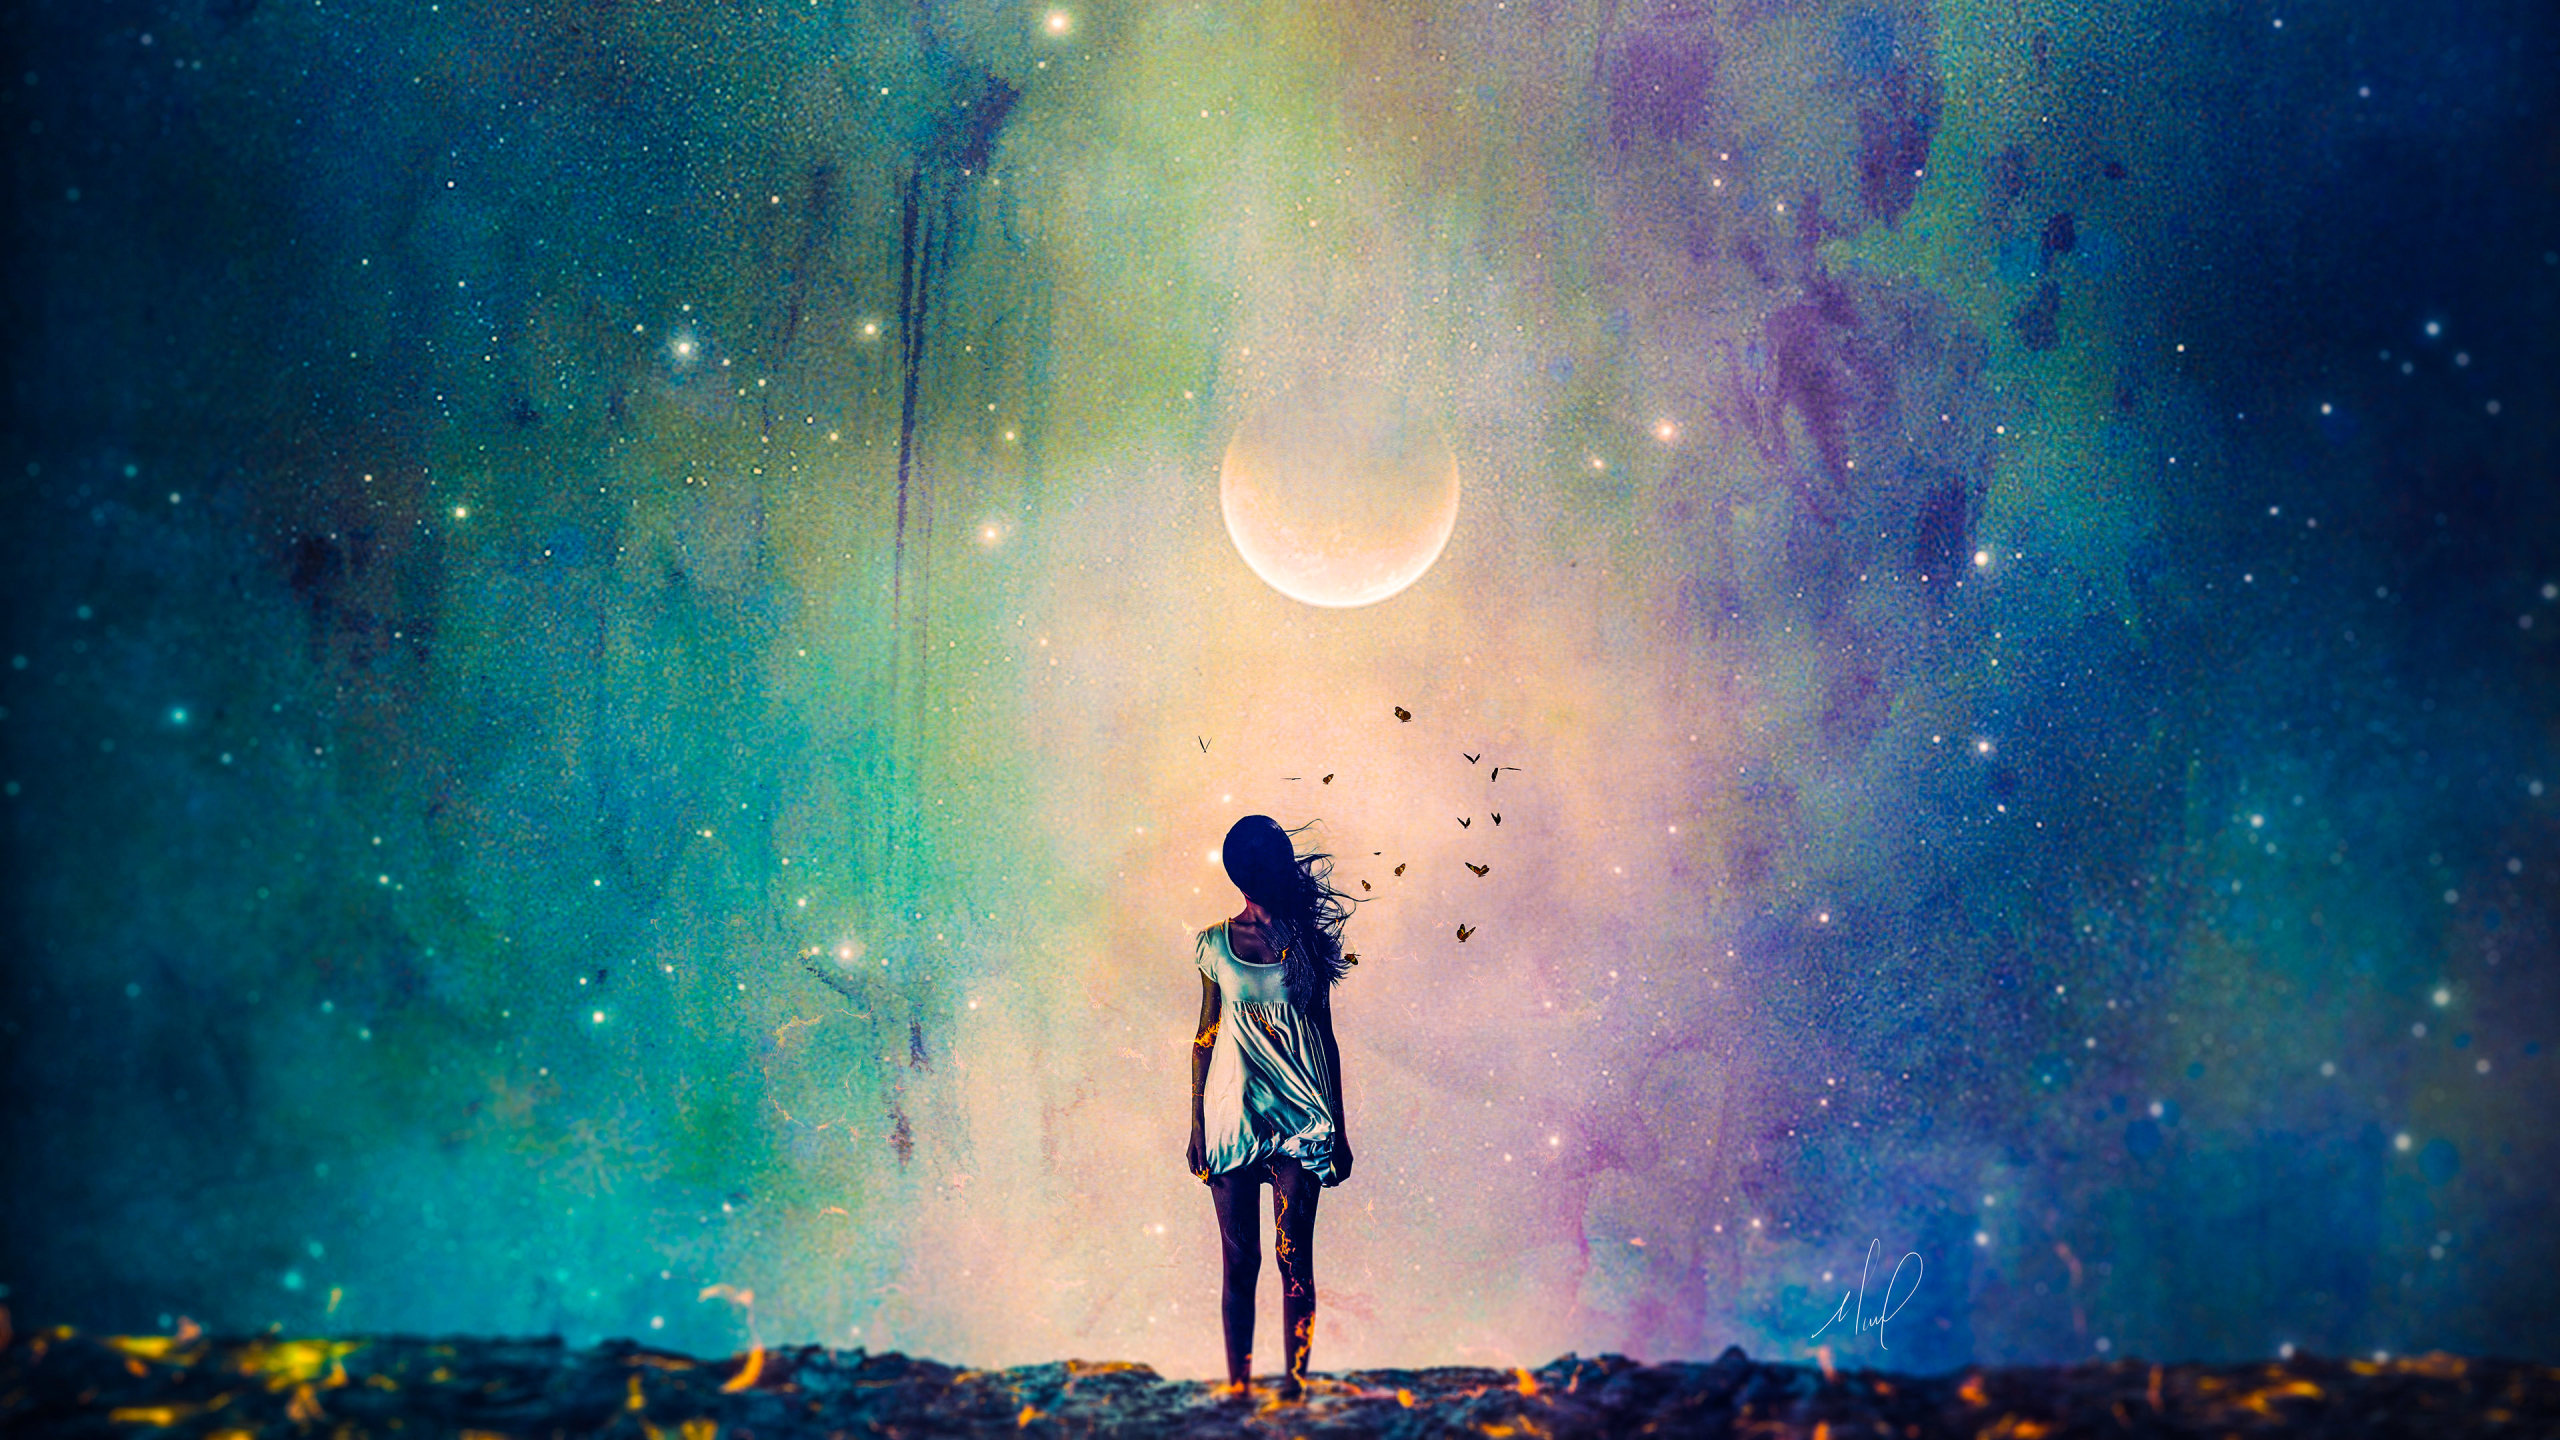 Wallpaper Of Alone, Full Moon, Girl, Sad, Sky Background And Sad Girl